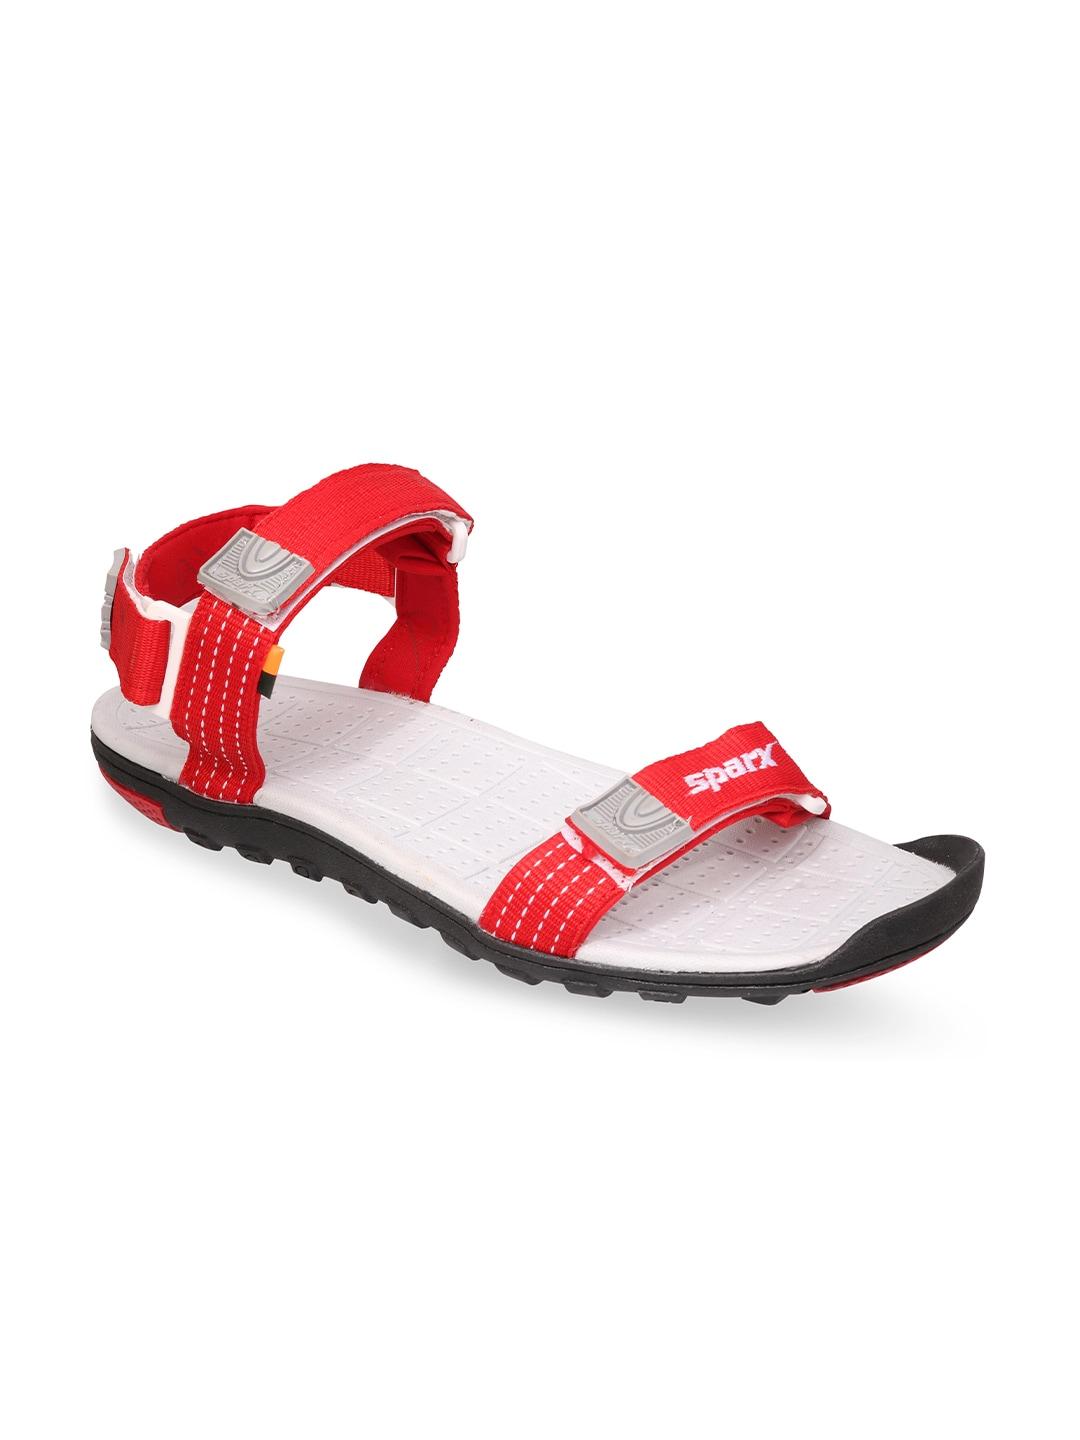 sparx-men-red-&-white-sports-sandals